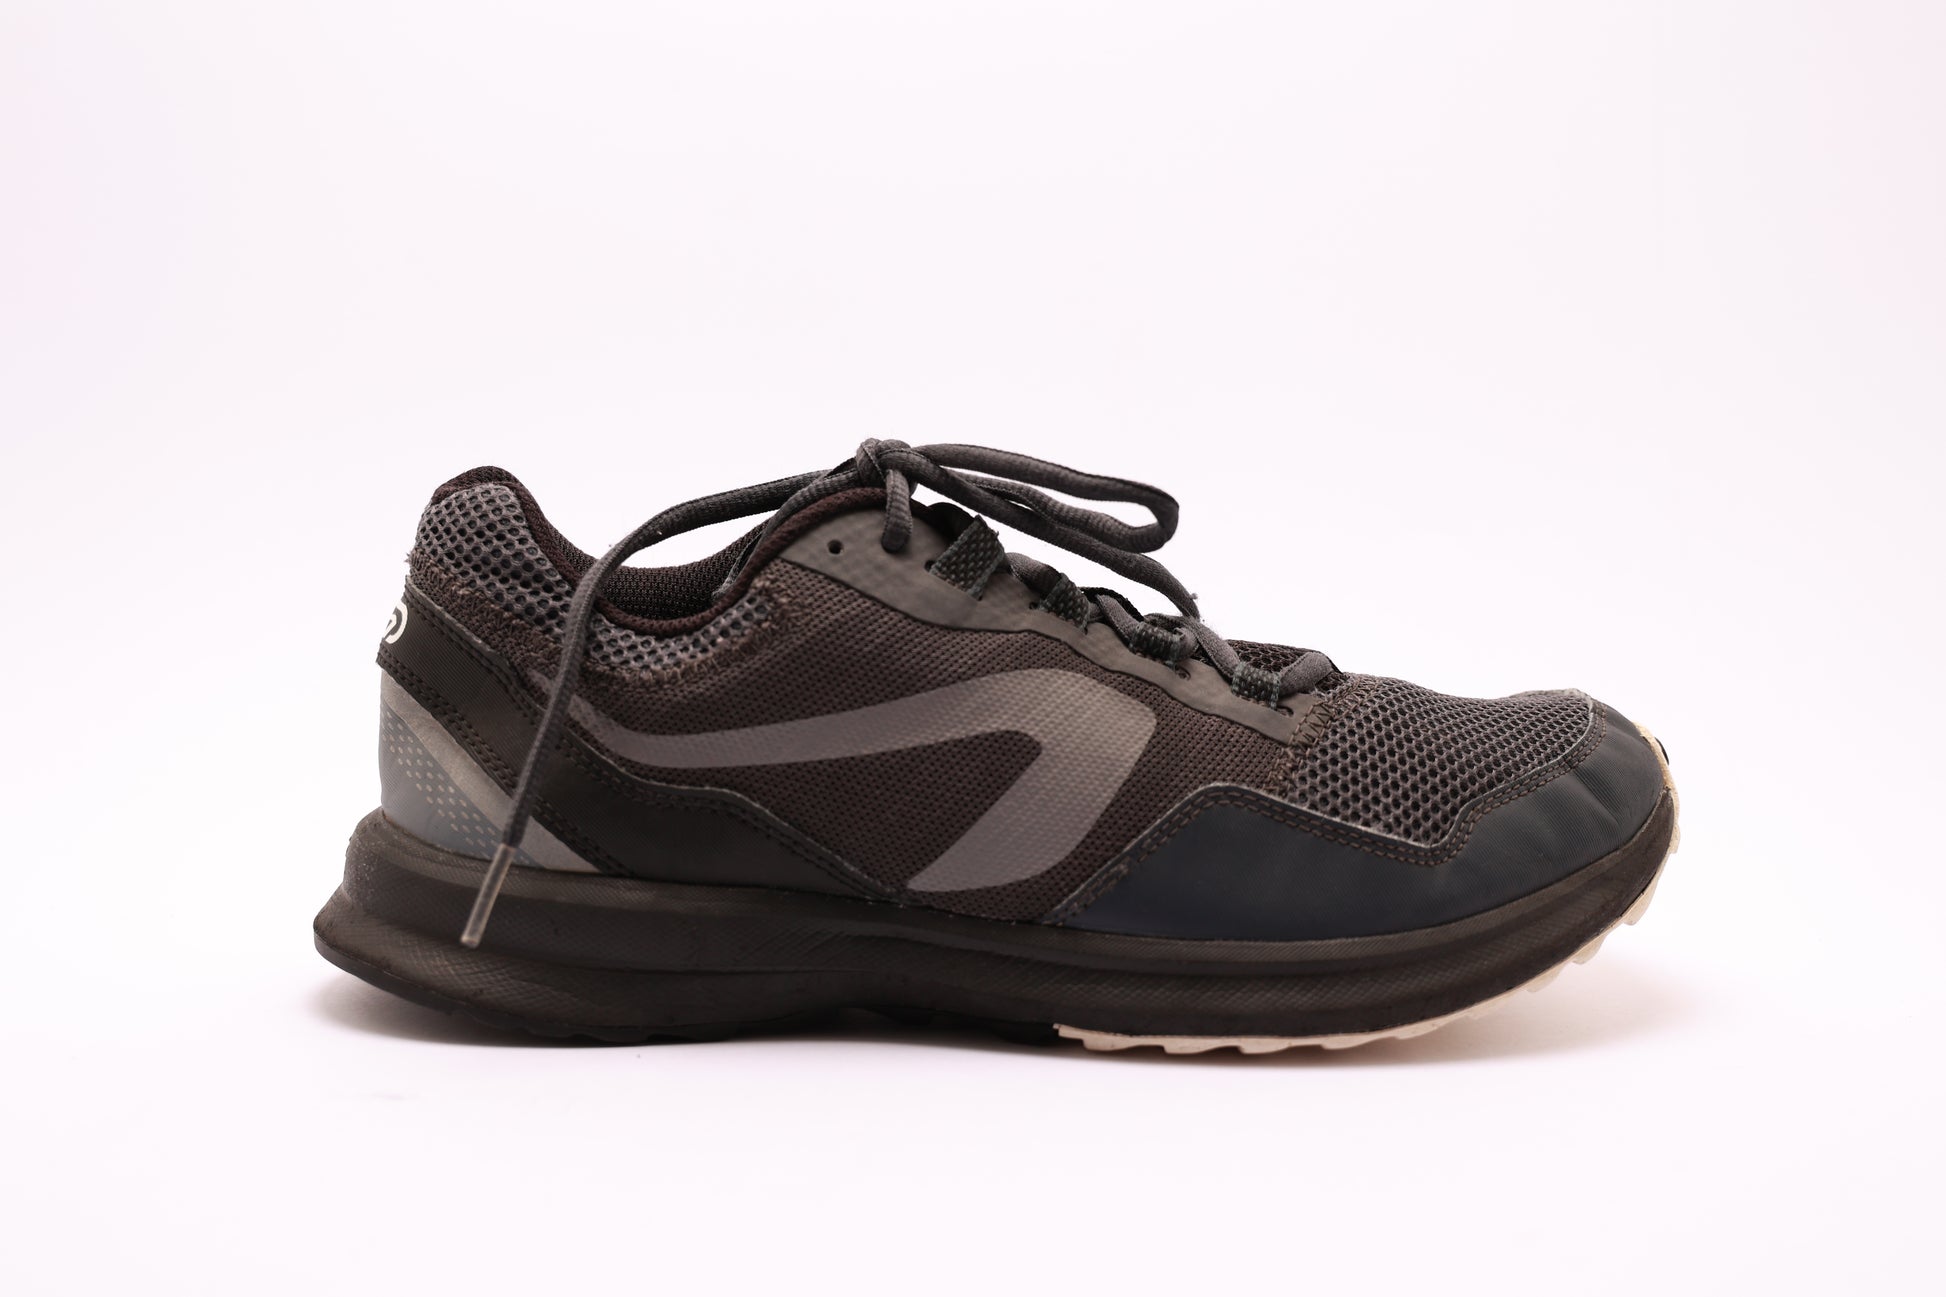 Men's Running Shoes - Run Active Black/Grey - black - Kalenji - Decathlon